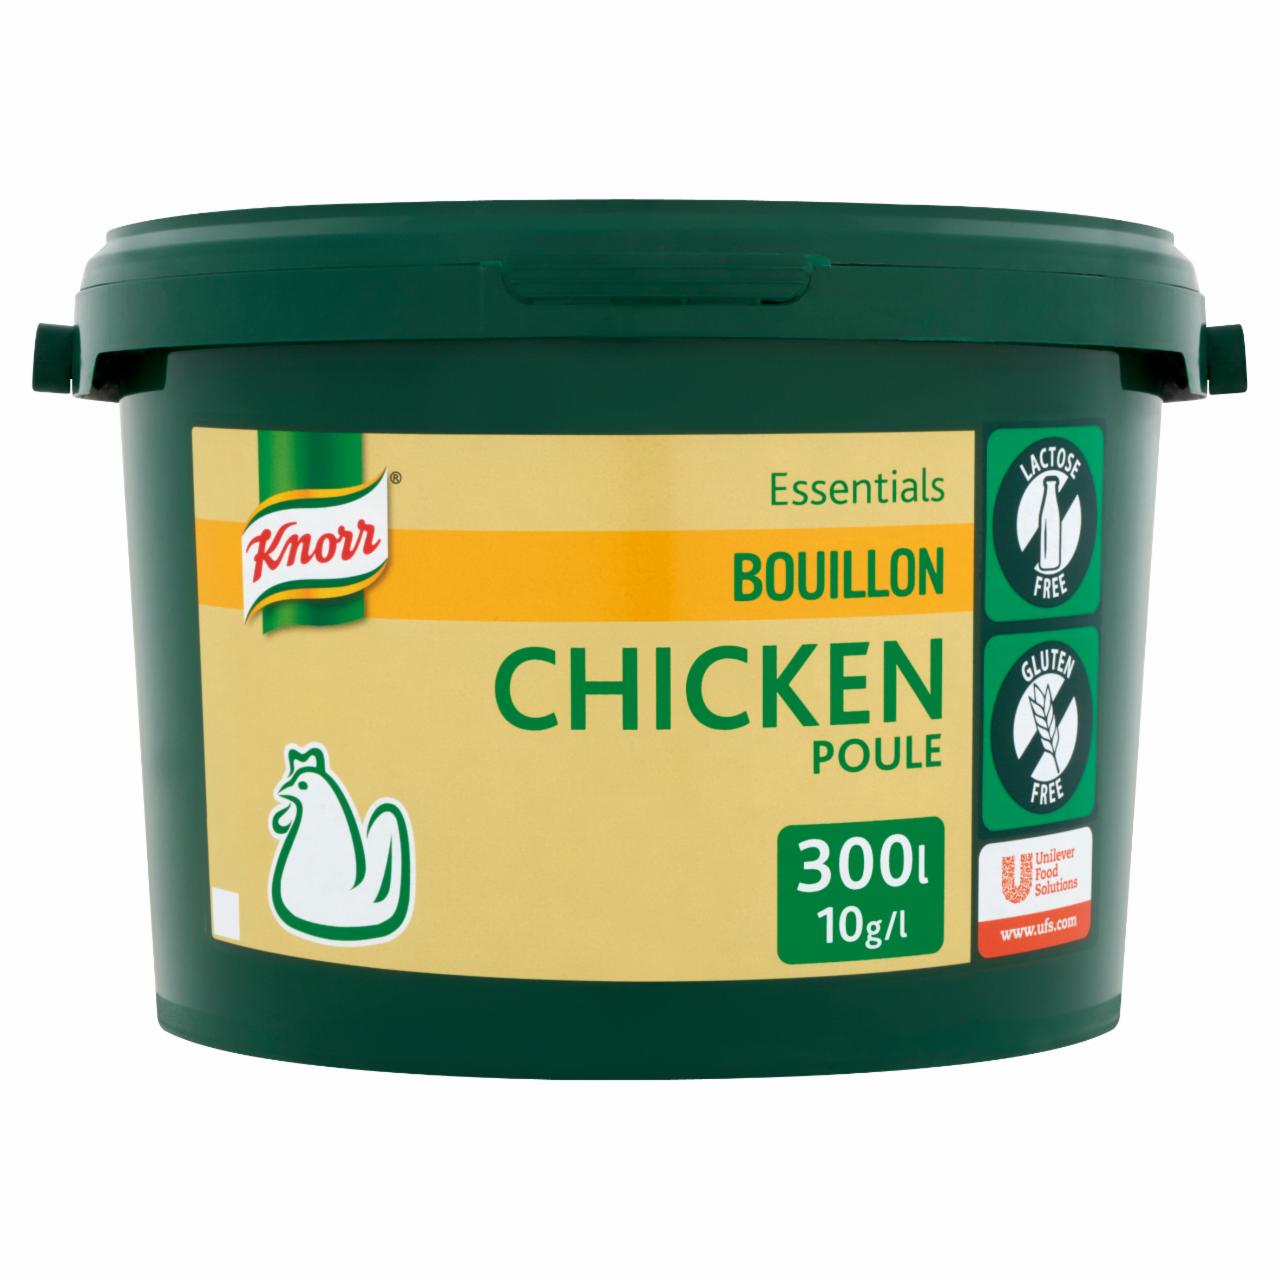 Képek - Knorr tyúkhúsleves alap - allergénmentes 3 kg